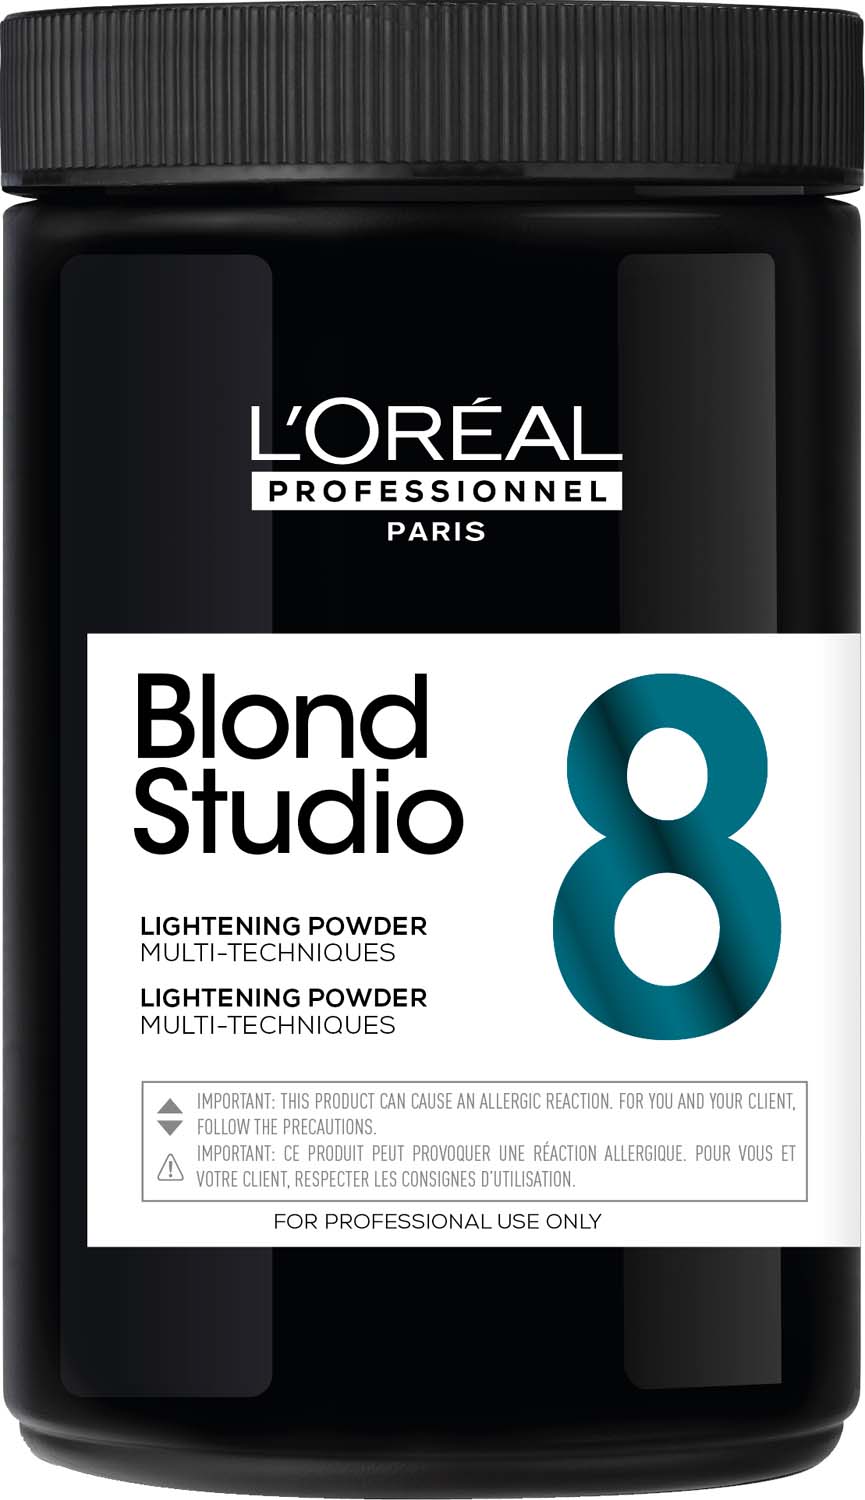 Blond Studio 8 Multi Tech Powder, 500 g